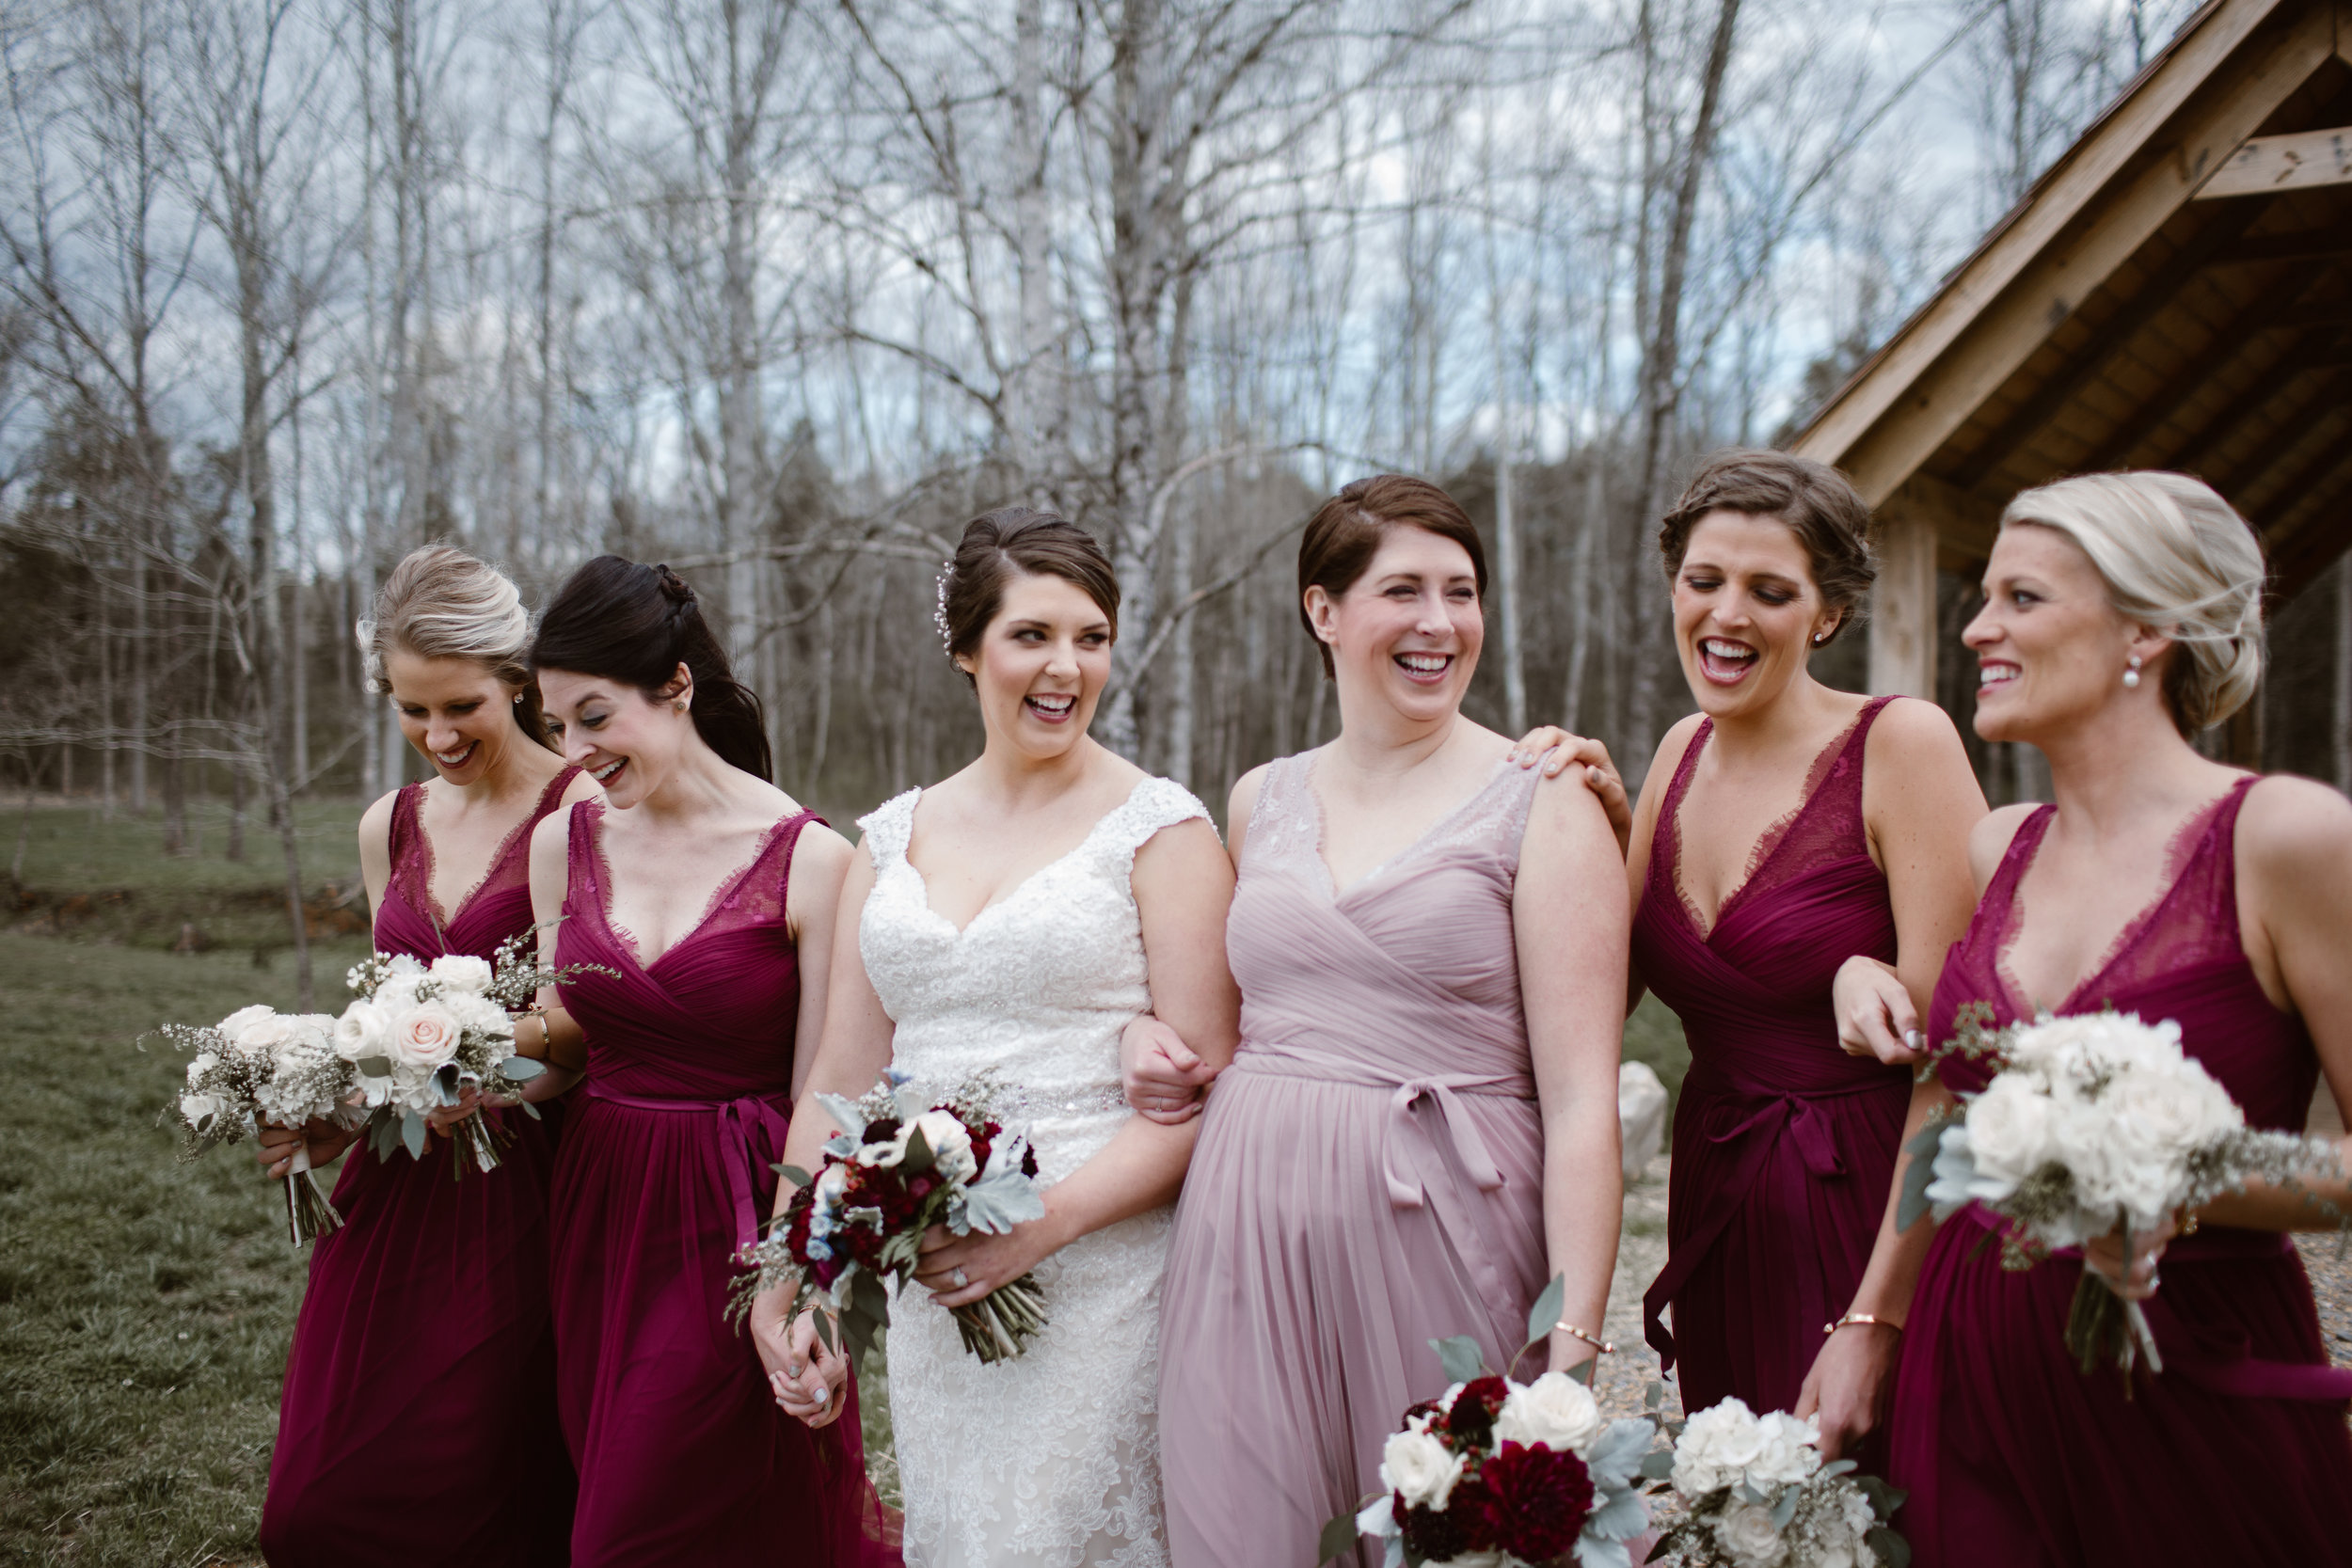 Maroon bridesmaid Dresses - A Burgundy + Bronze Ramble Creek Fall Wedding - Erin Morrison Photography